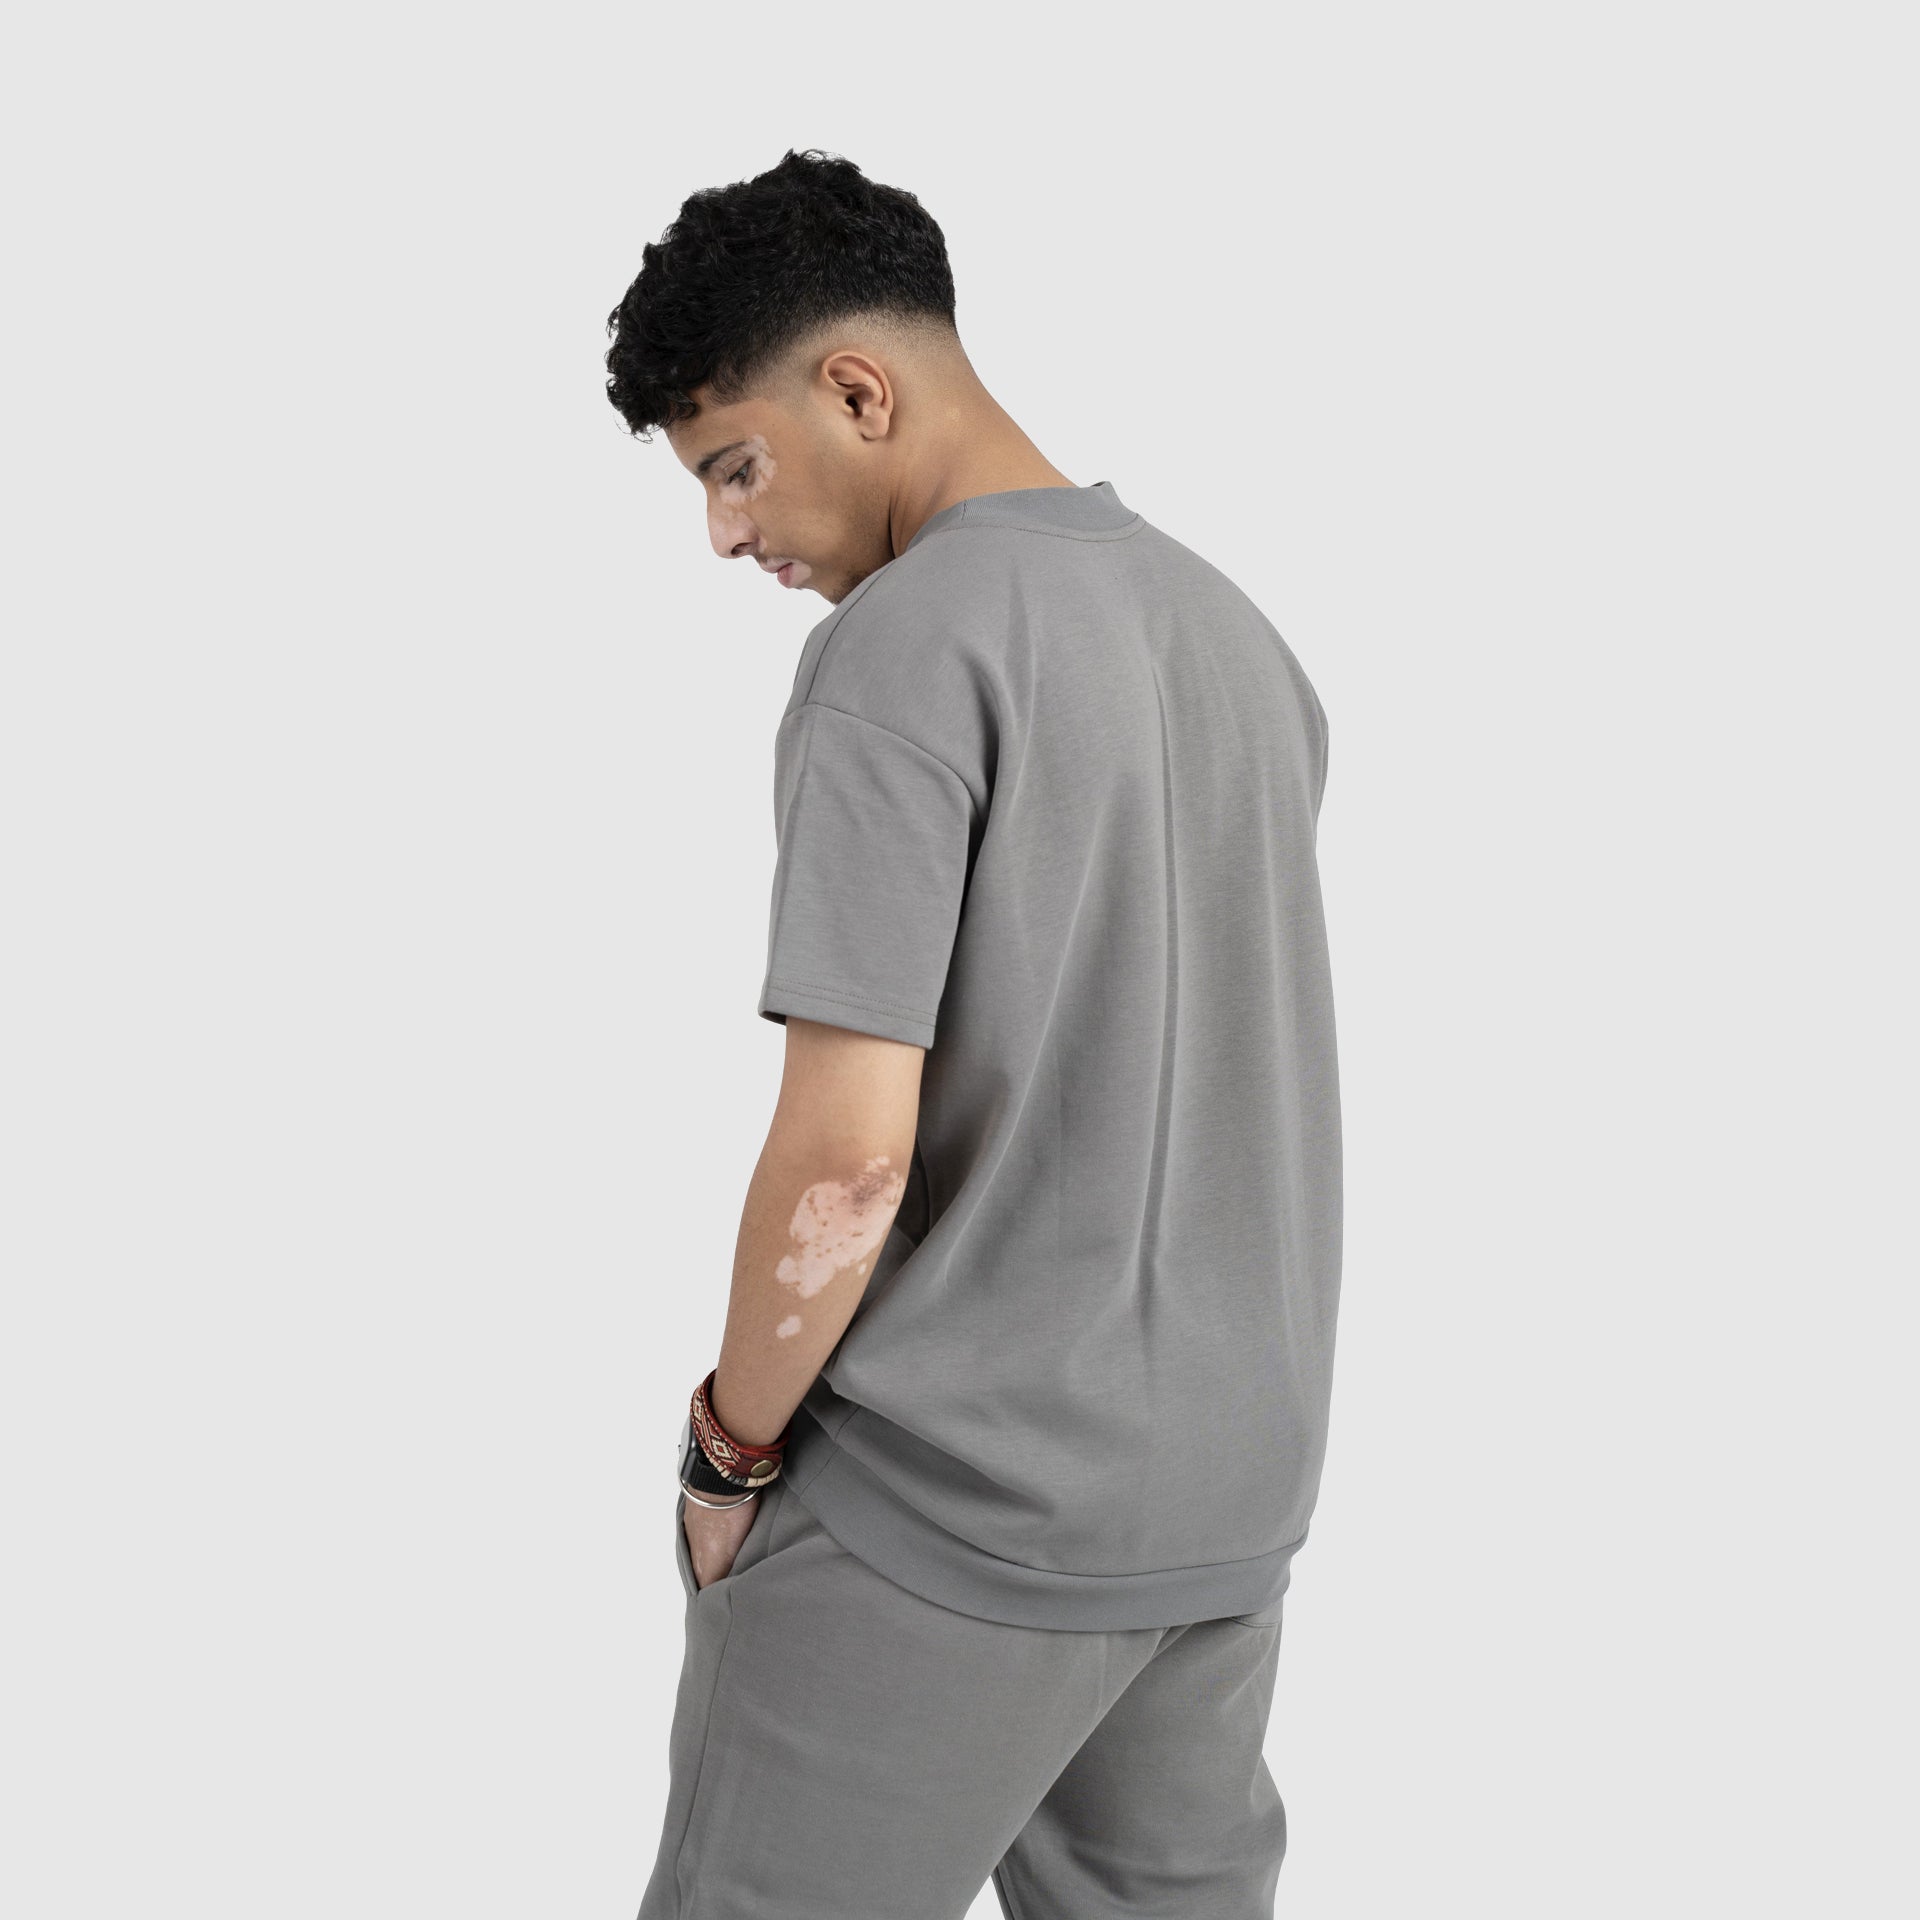 Gray Pants From Weaver Design